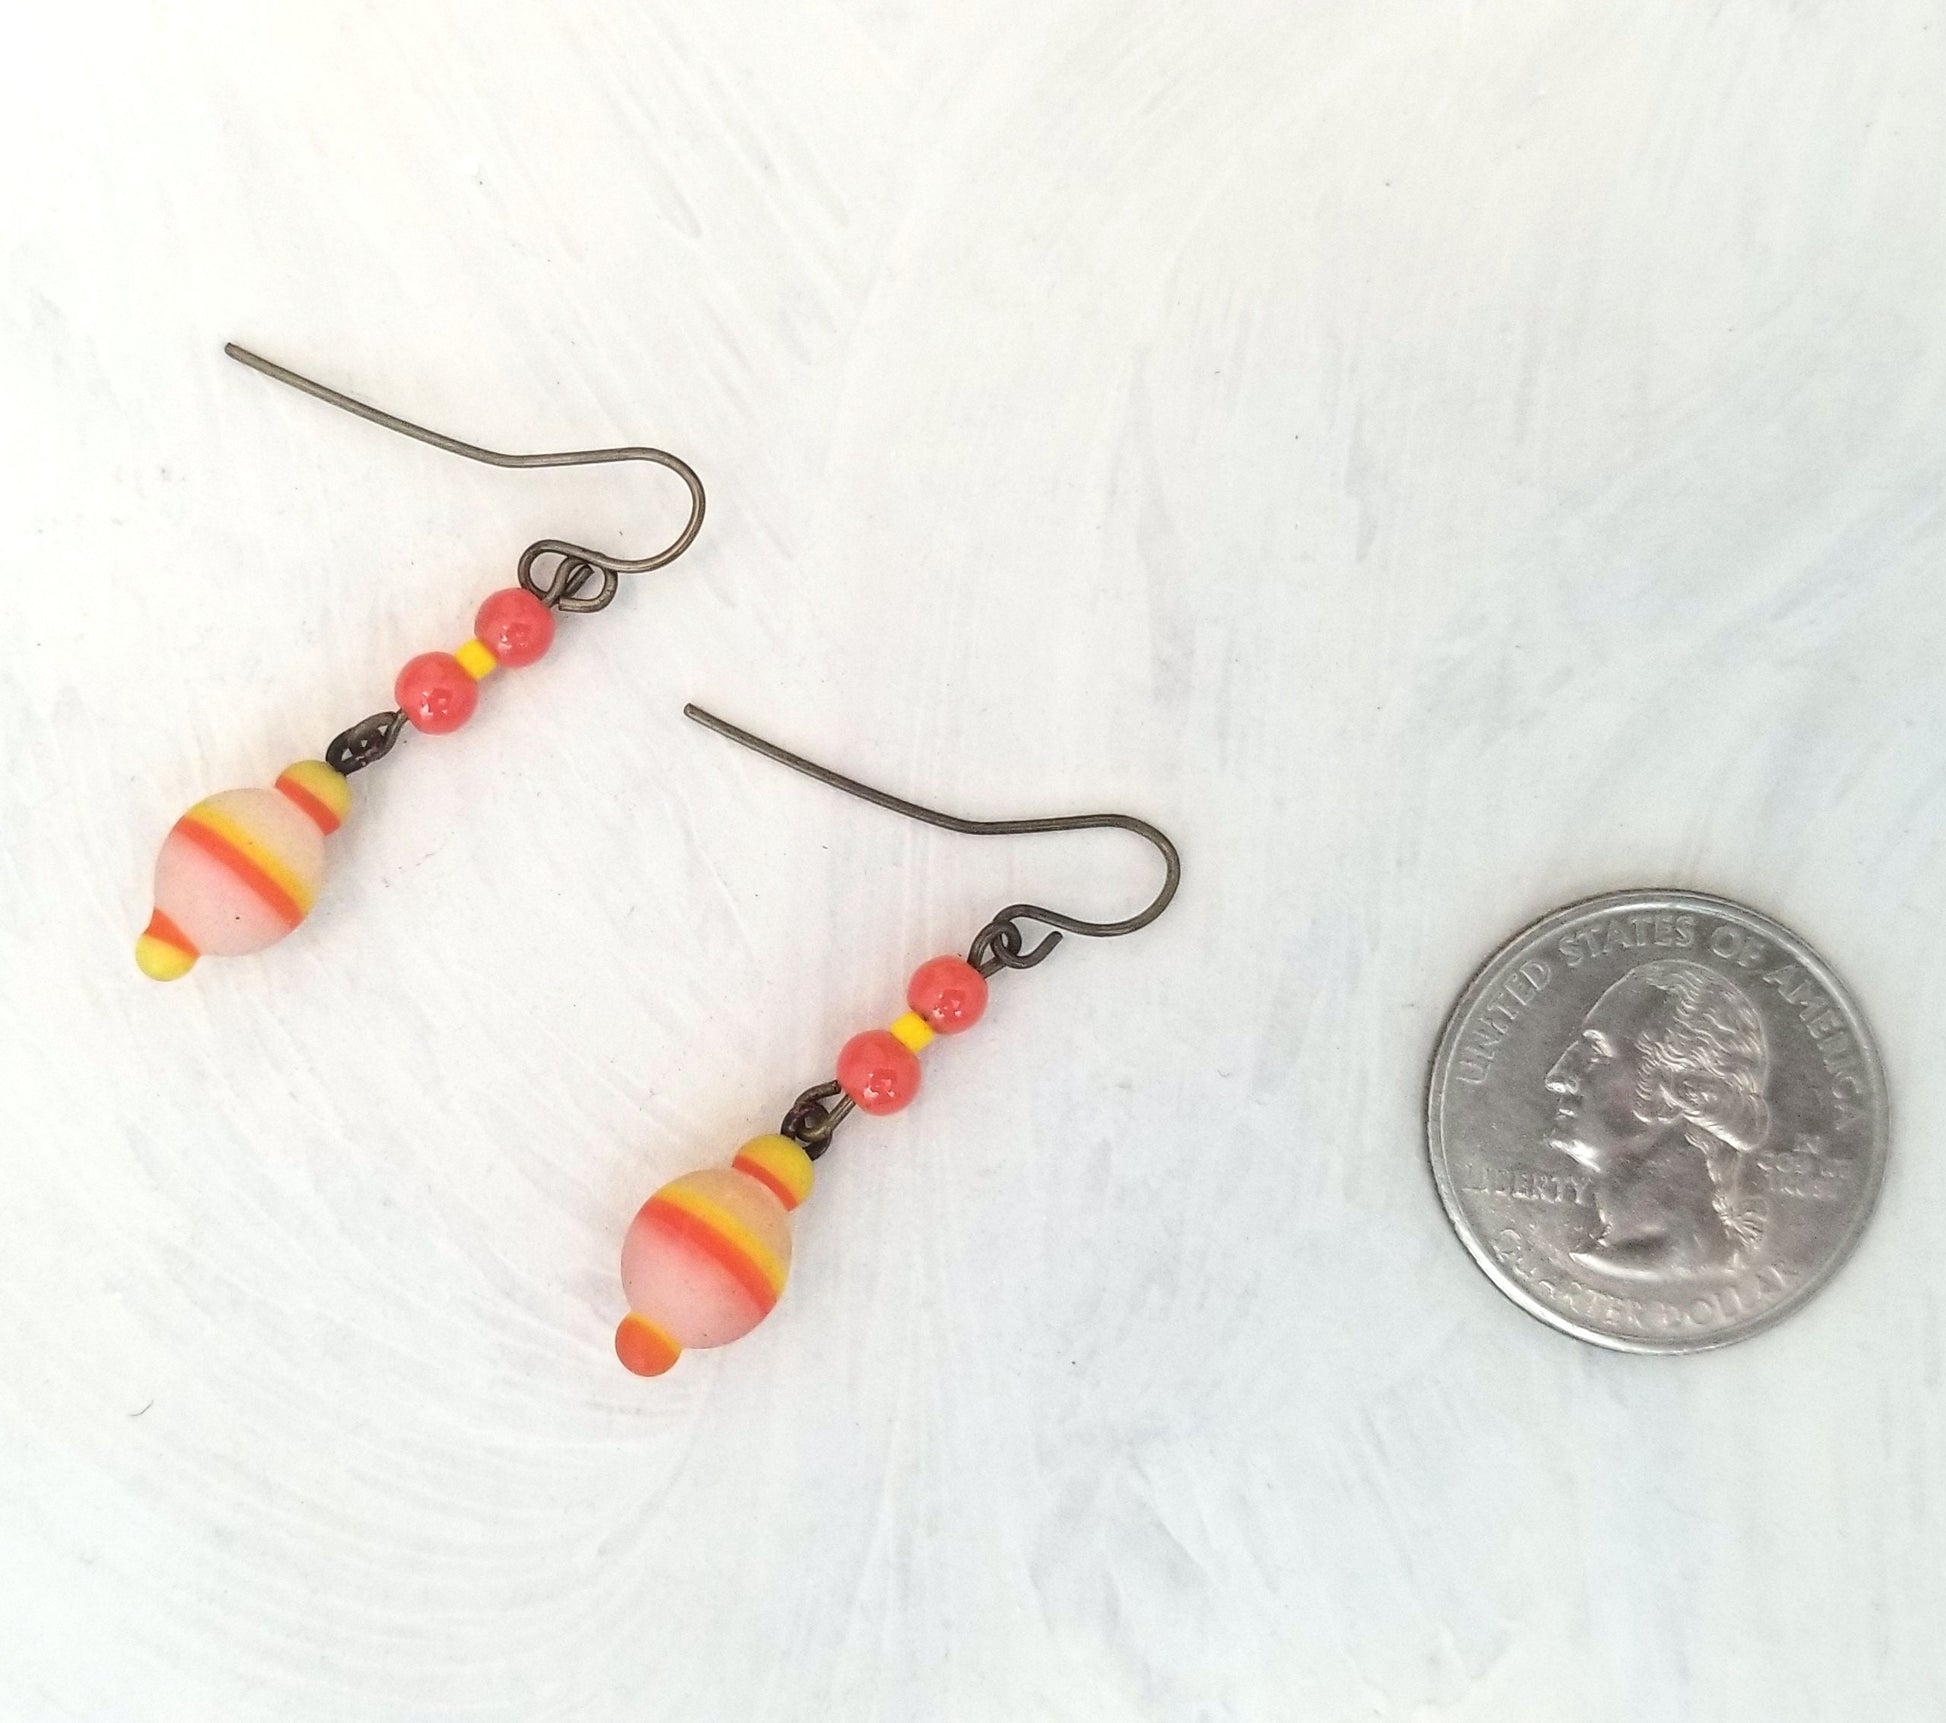 Upcycled Earrings with Vintage Lampwork Glass Beads Boho Style OOAK Handmade Orange & Yellow #914